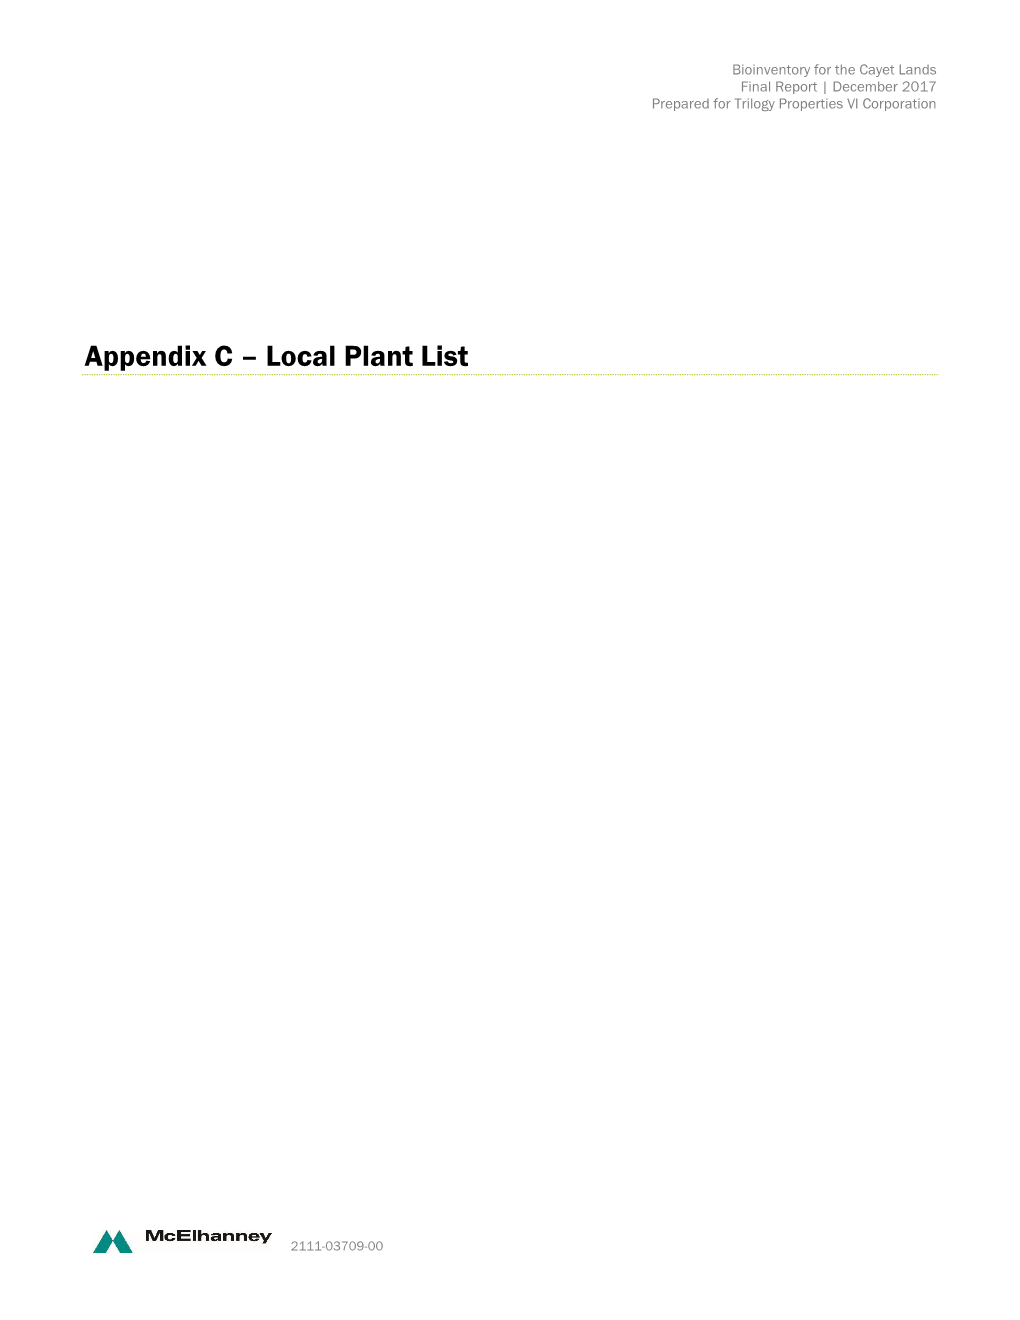 Appendix C – Local Plant List